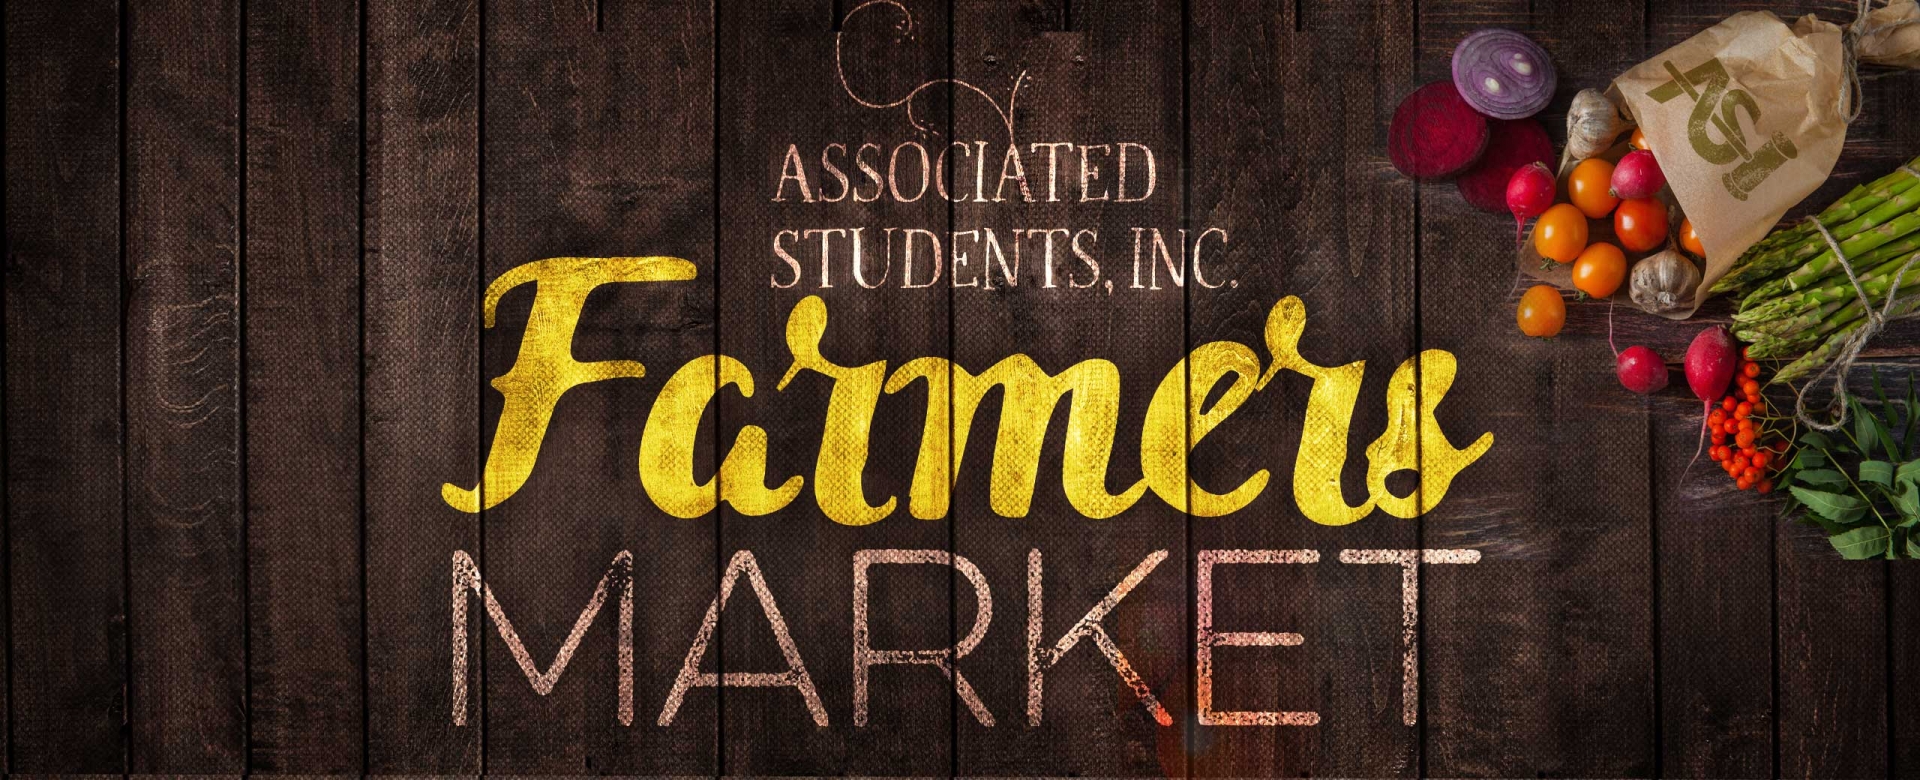 Farmers Market image